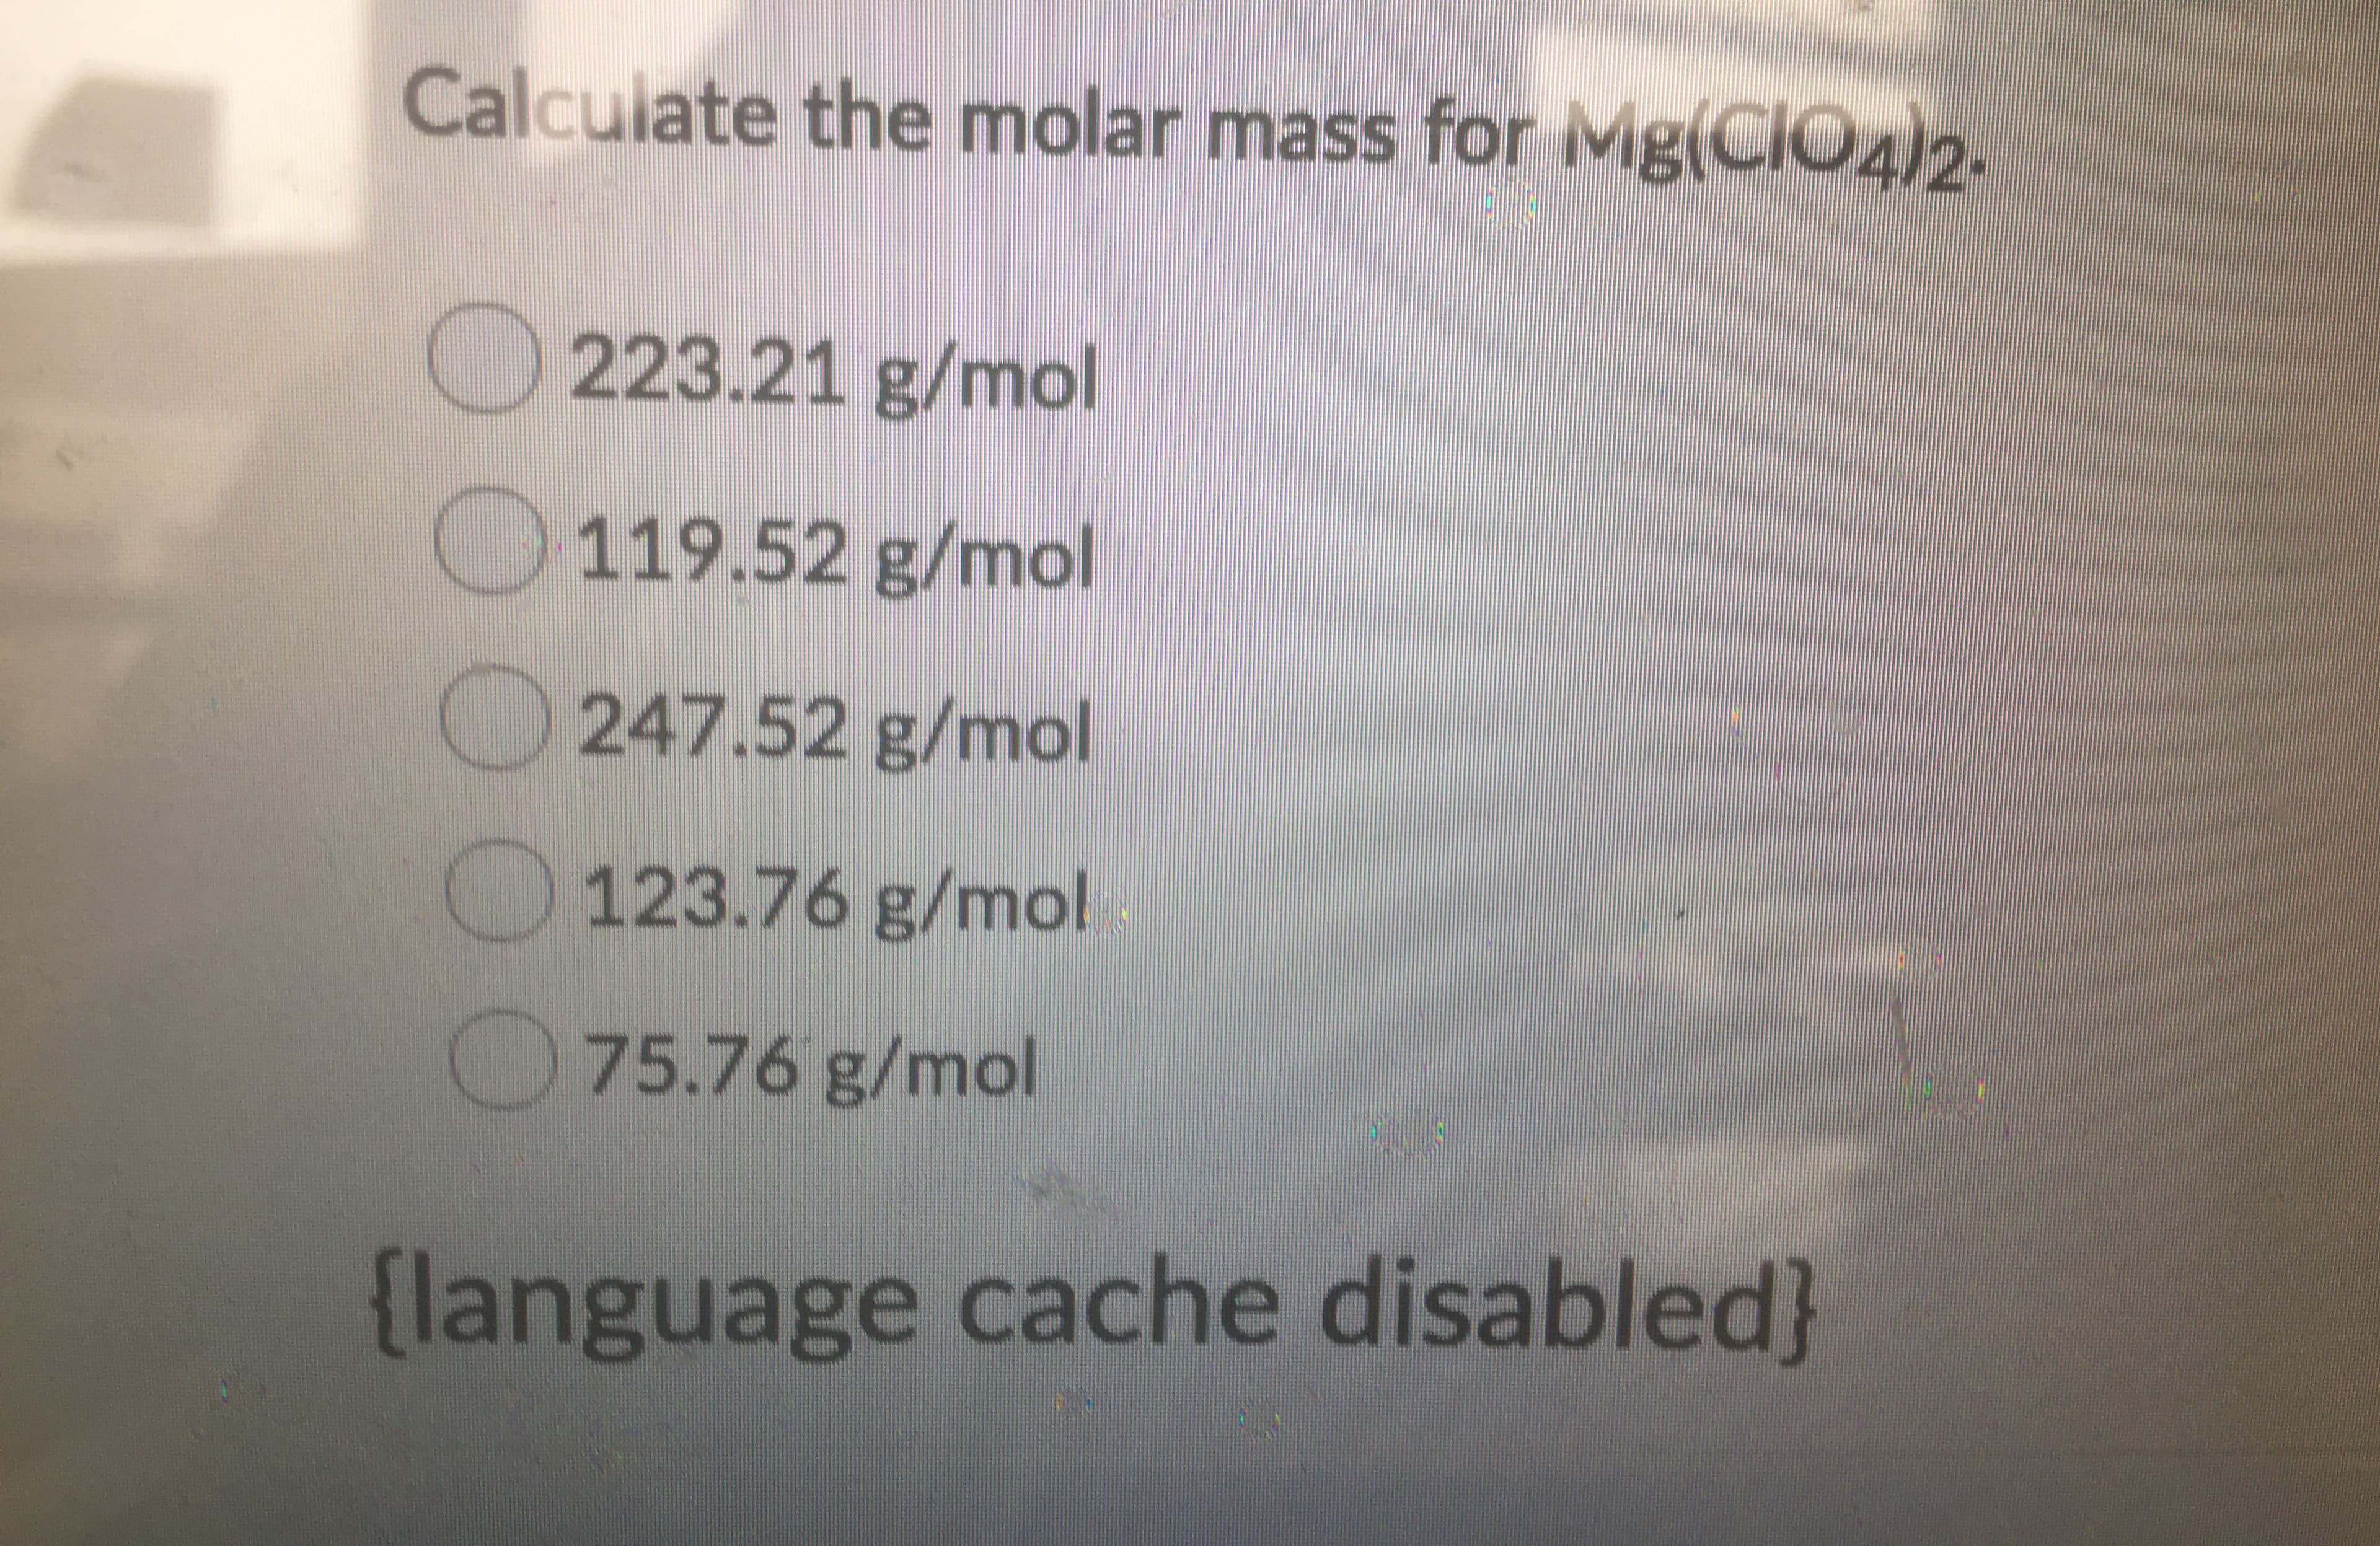 Calculate the molar mass for MgCIO42
223.21 g/mol
119.52 g/mol
247.52 g/mo
123.76 g/mol
75.76 g/mol
language cache disabled
